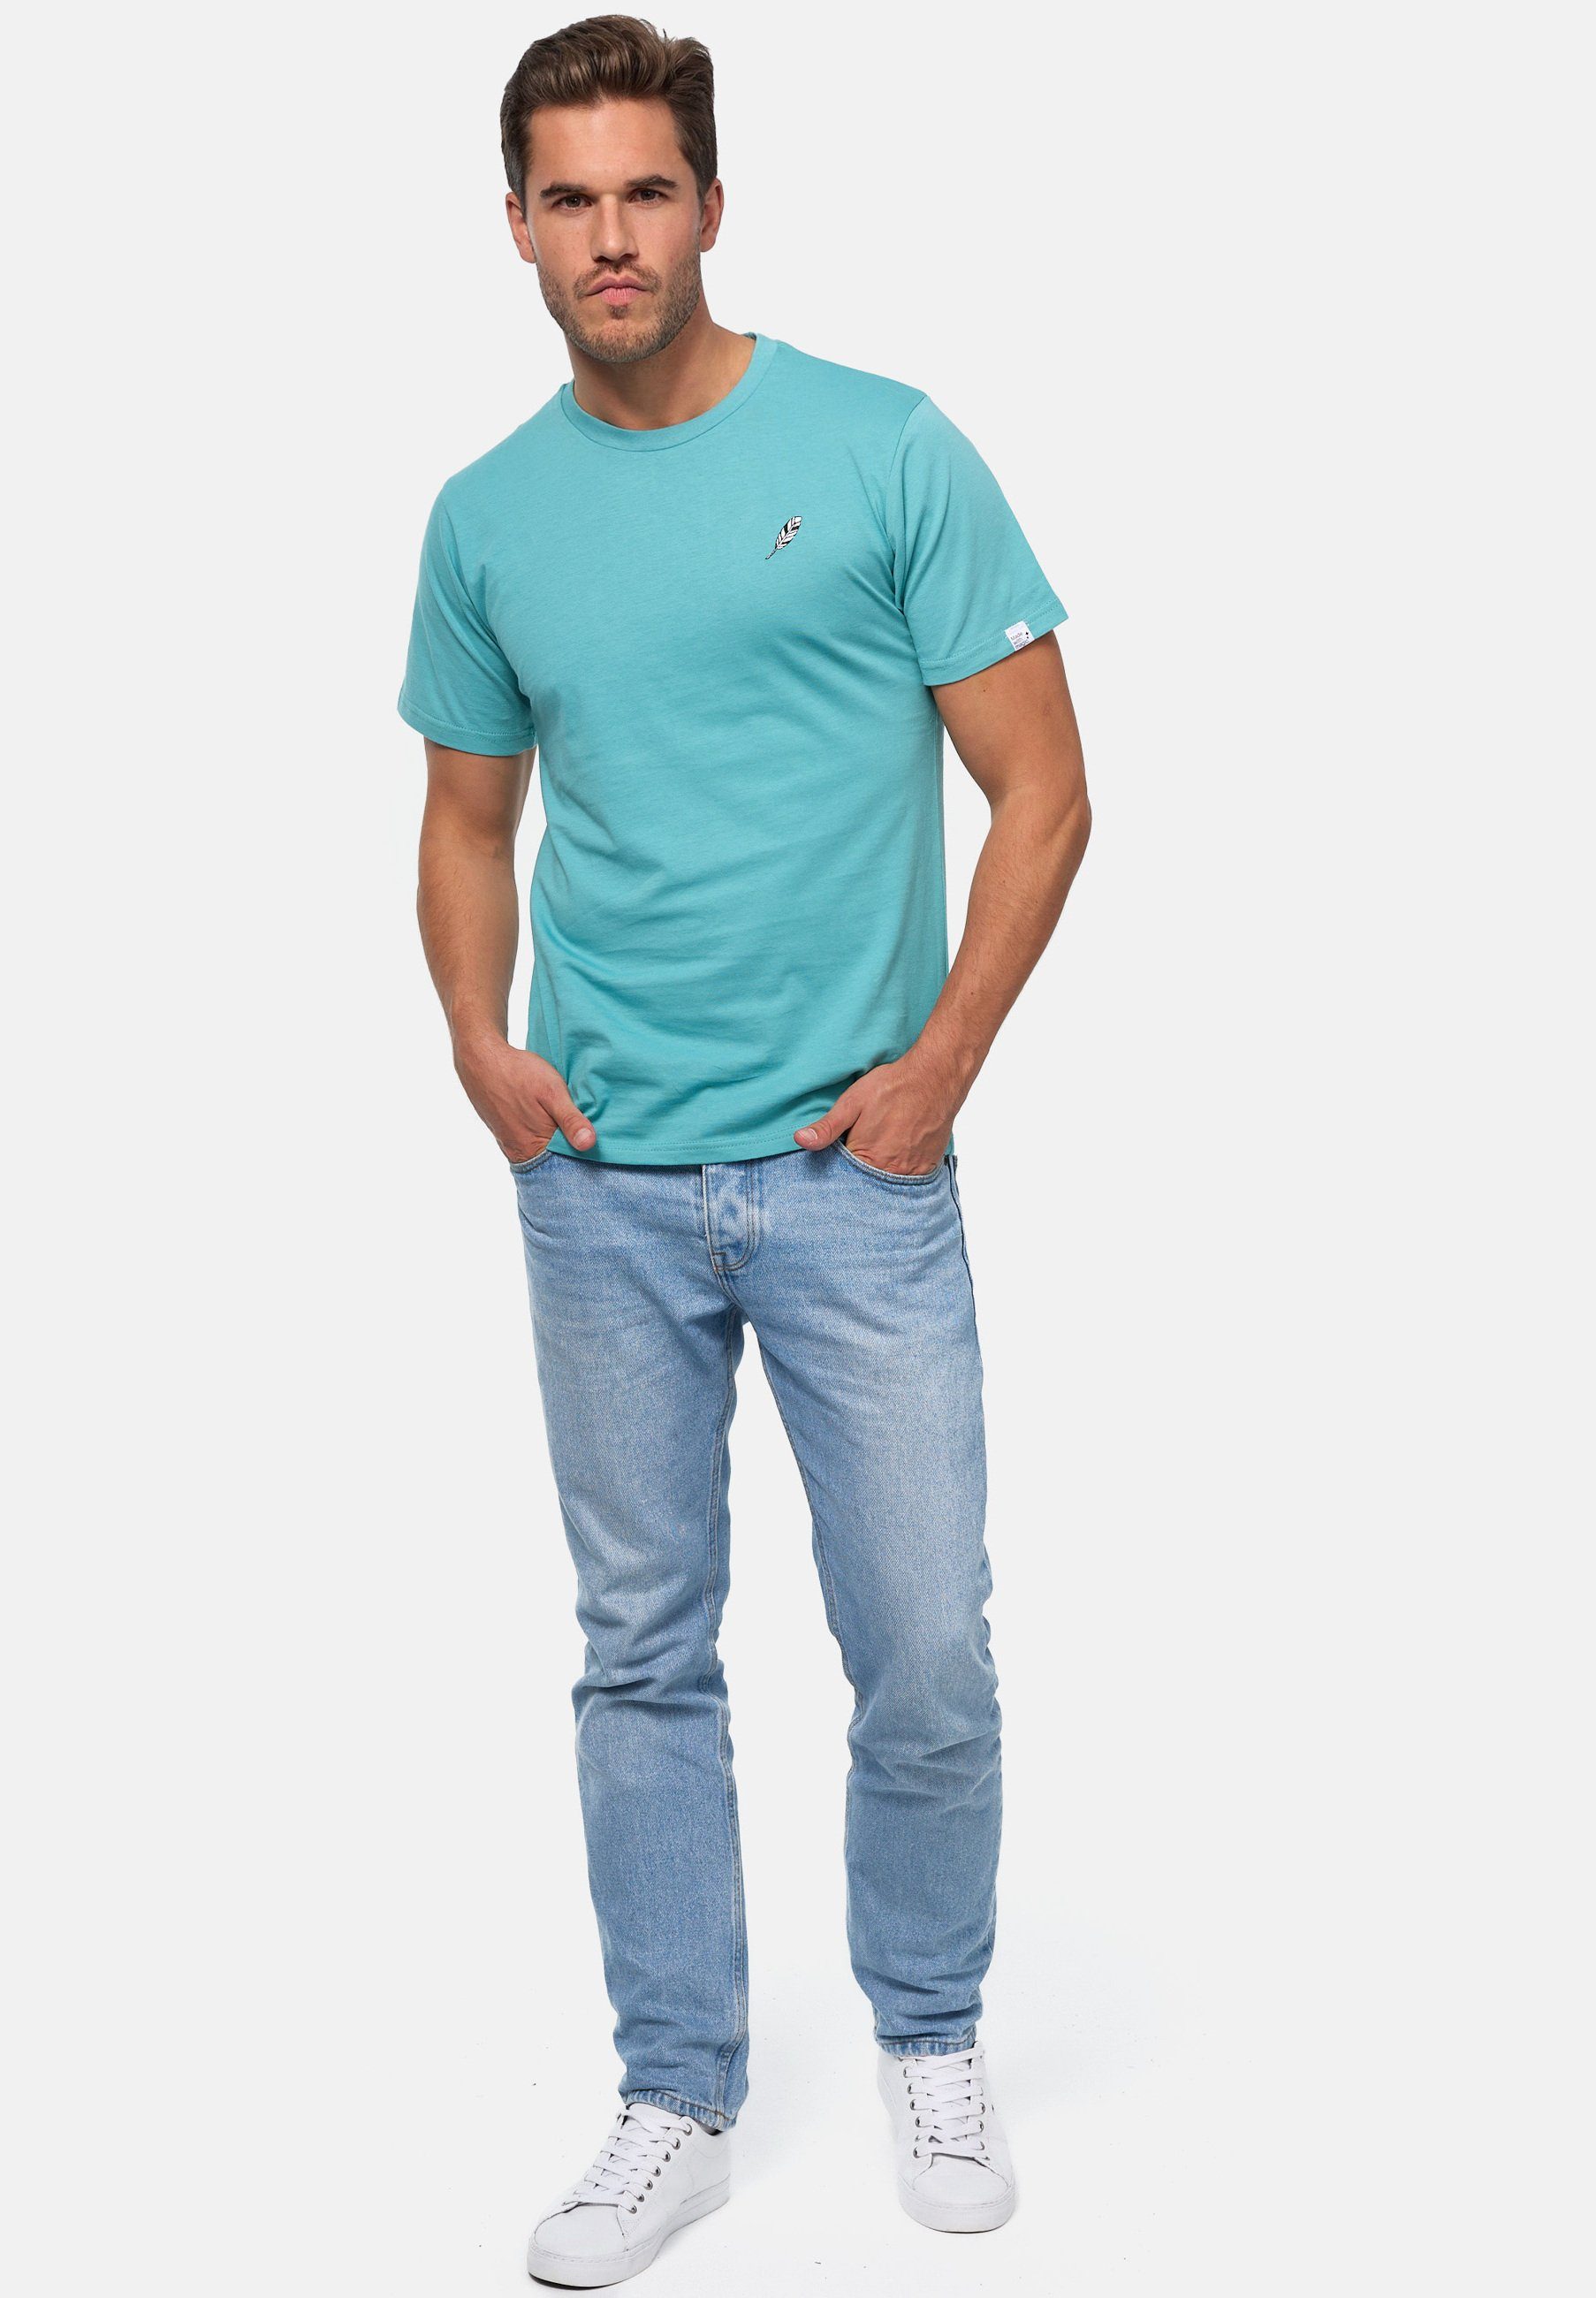 MIKON Bio-Baumwolle Feder Aqua zertifizierte GOTS T-Shirt